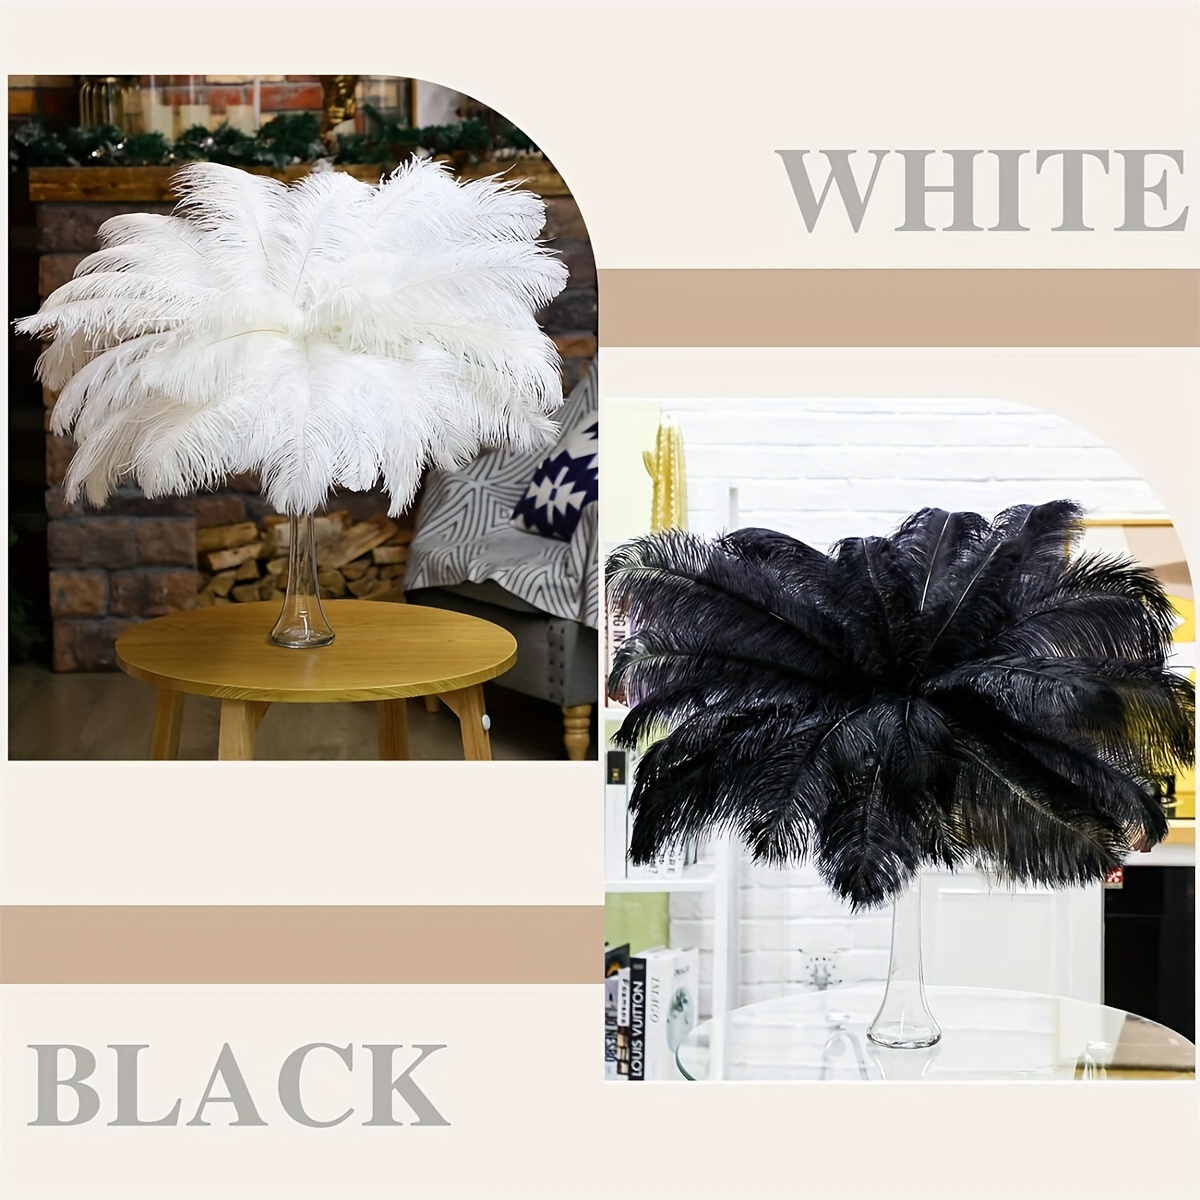  30 Pcs 18-20 Inch Large Natural Ostrich Feathers Bulk for  Centerpieces for Wedding Party Centerpieces Home Decoration Flower  Arrangement (Black) : Arts, Crafts & Sewing